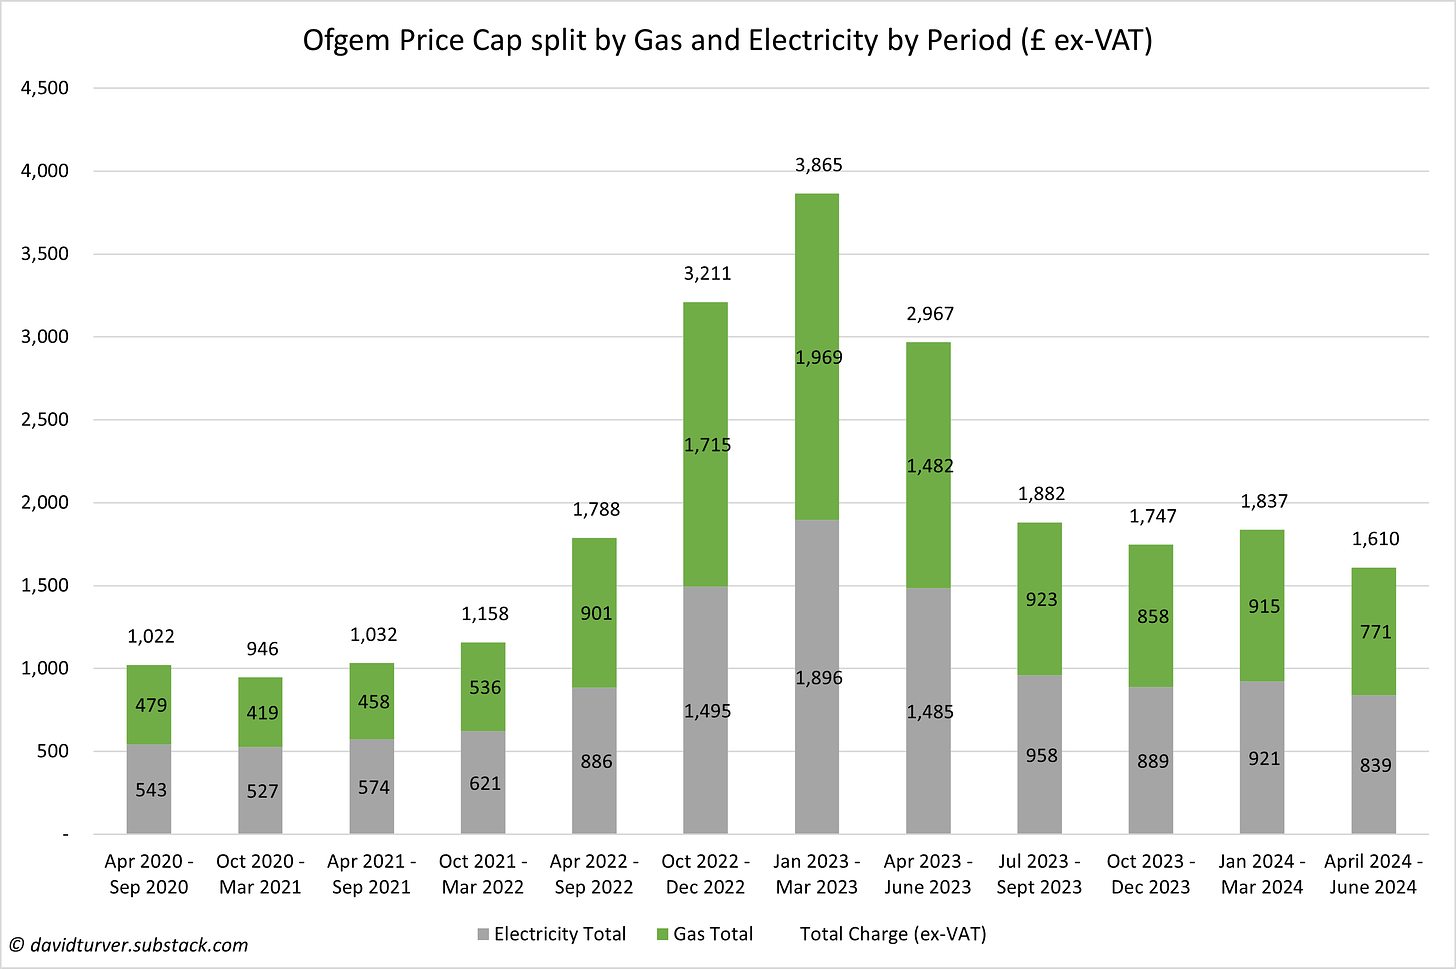 Figure 3 - Ofgem Dual-Fuel Price Cap Since April 2020 (£)